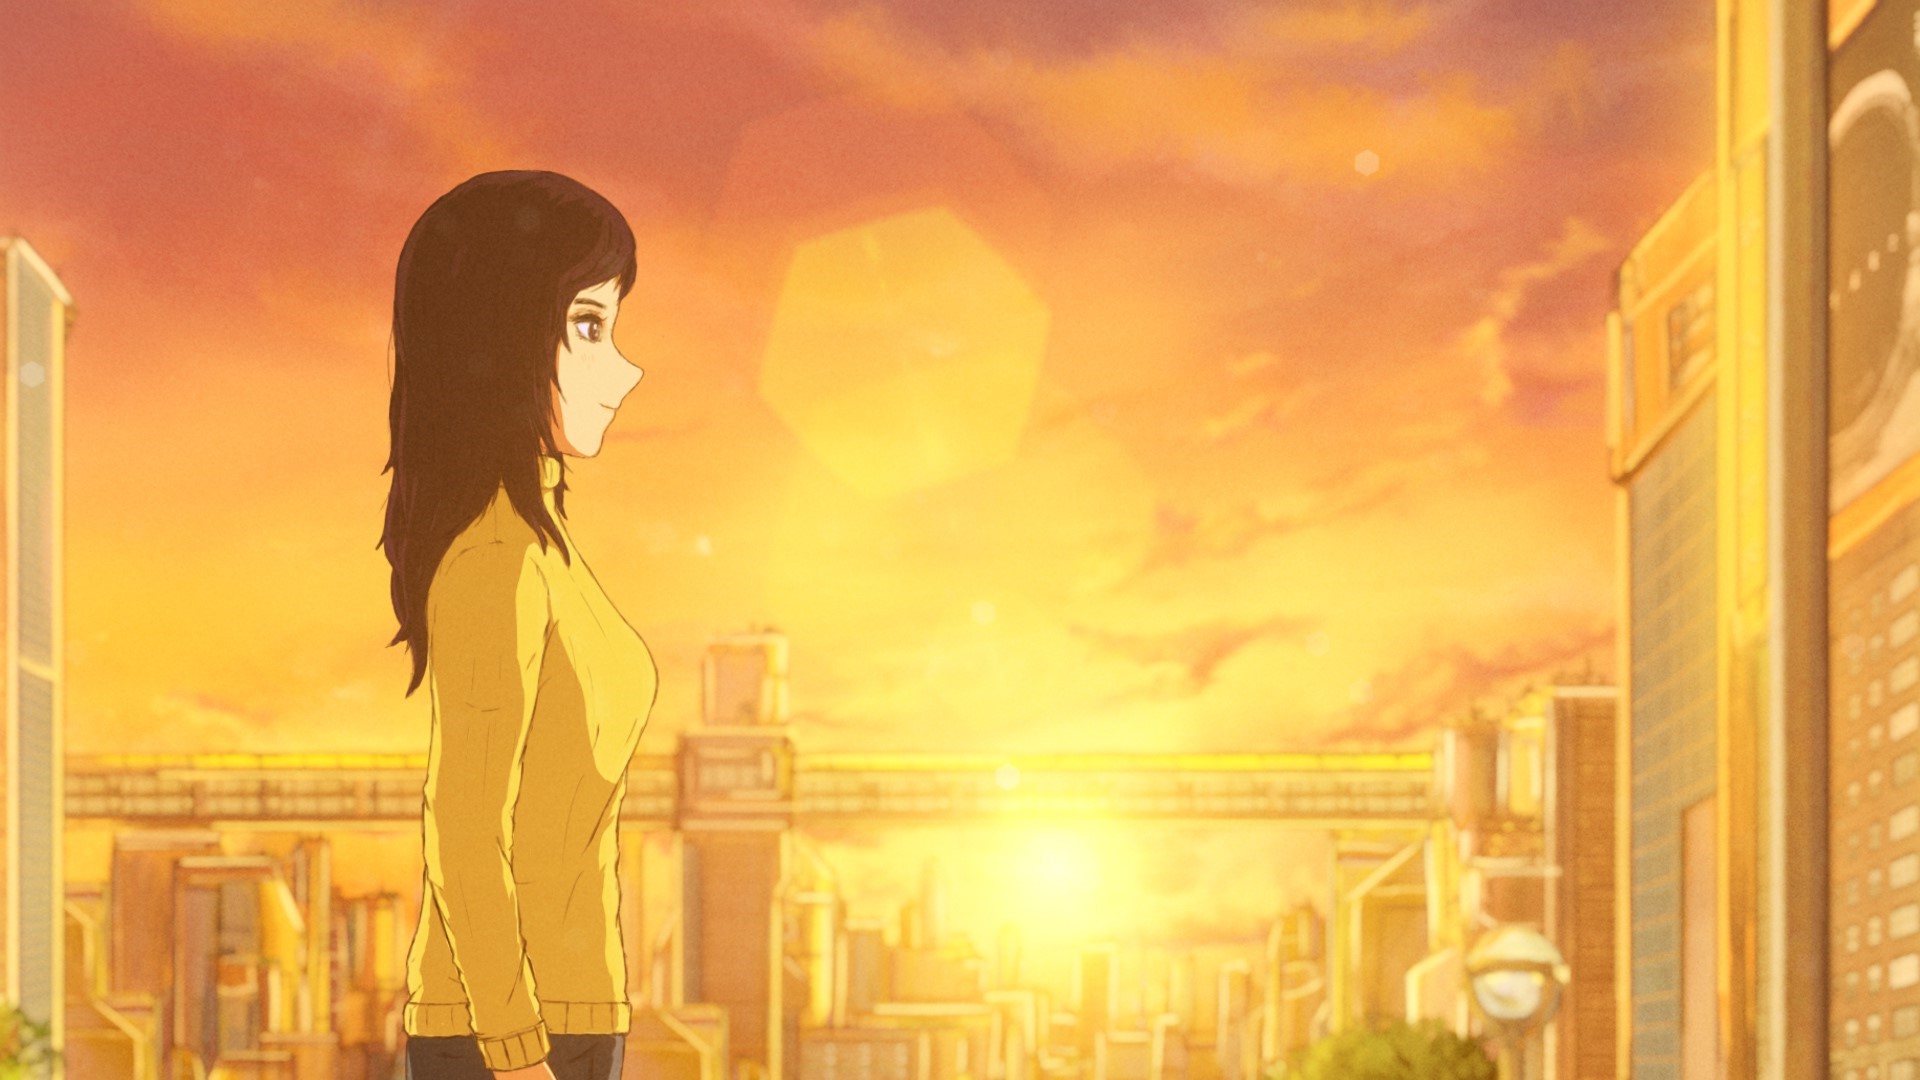 Digital Art Anime City Glowing Sunset Sky Anime Building Cityscape Anime Girls Smiling Yellow Sunset 1920x1080